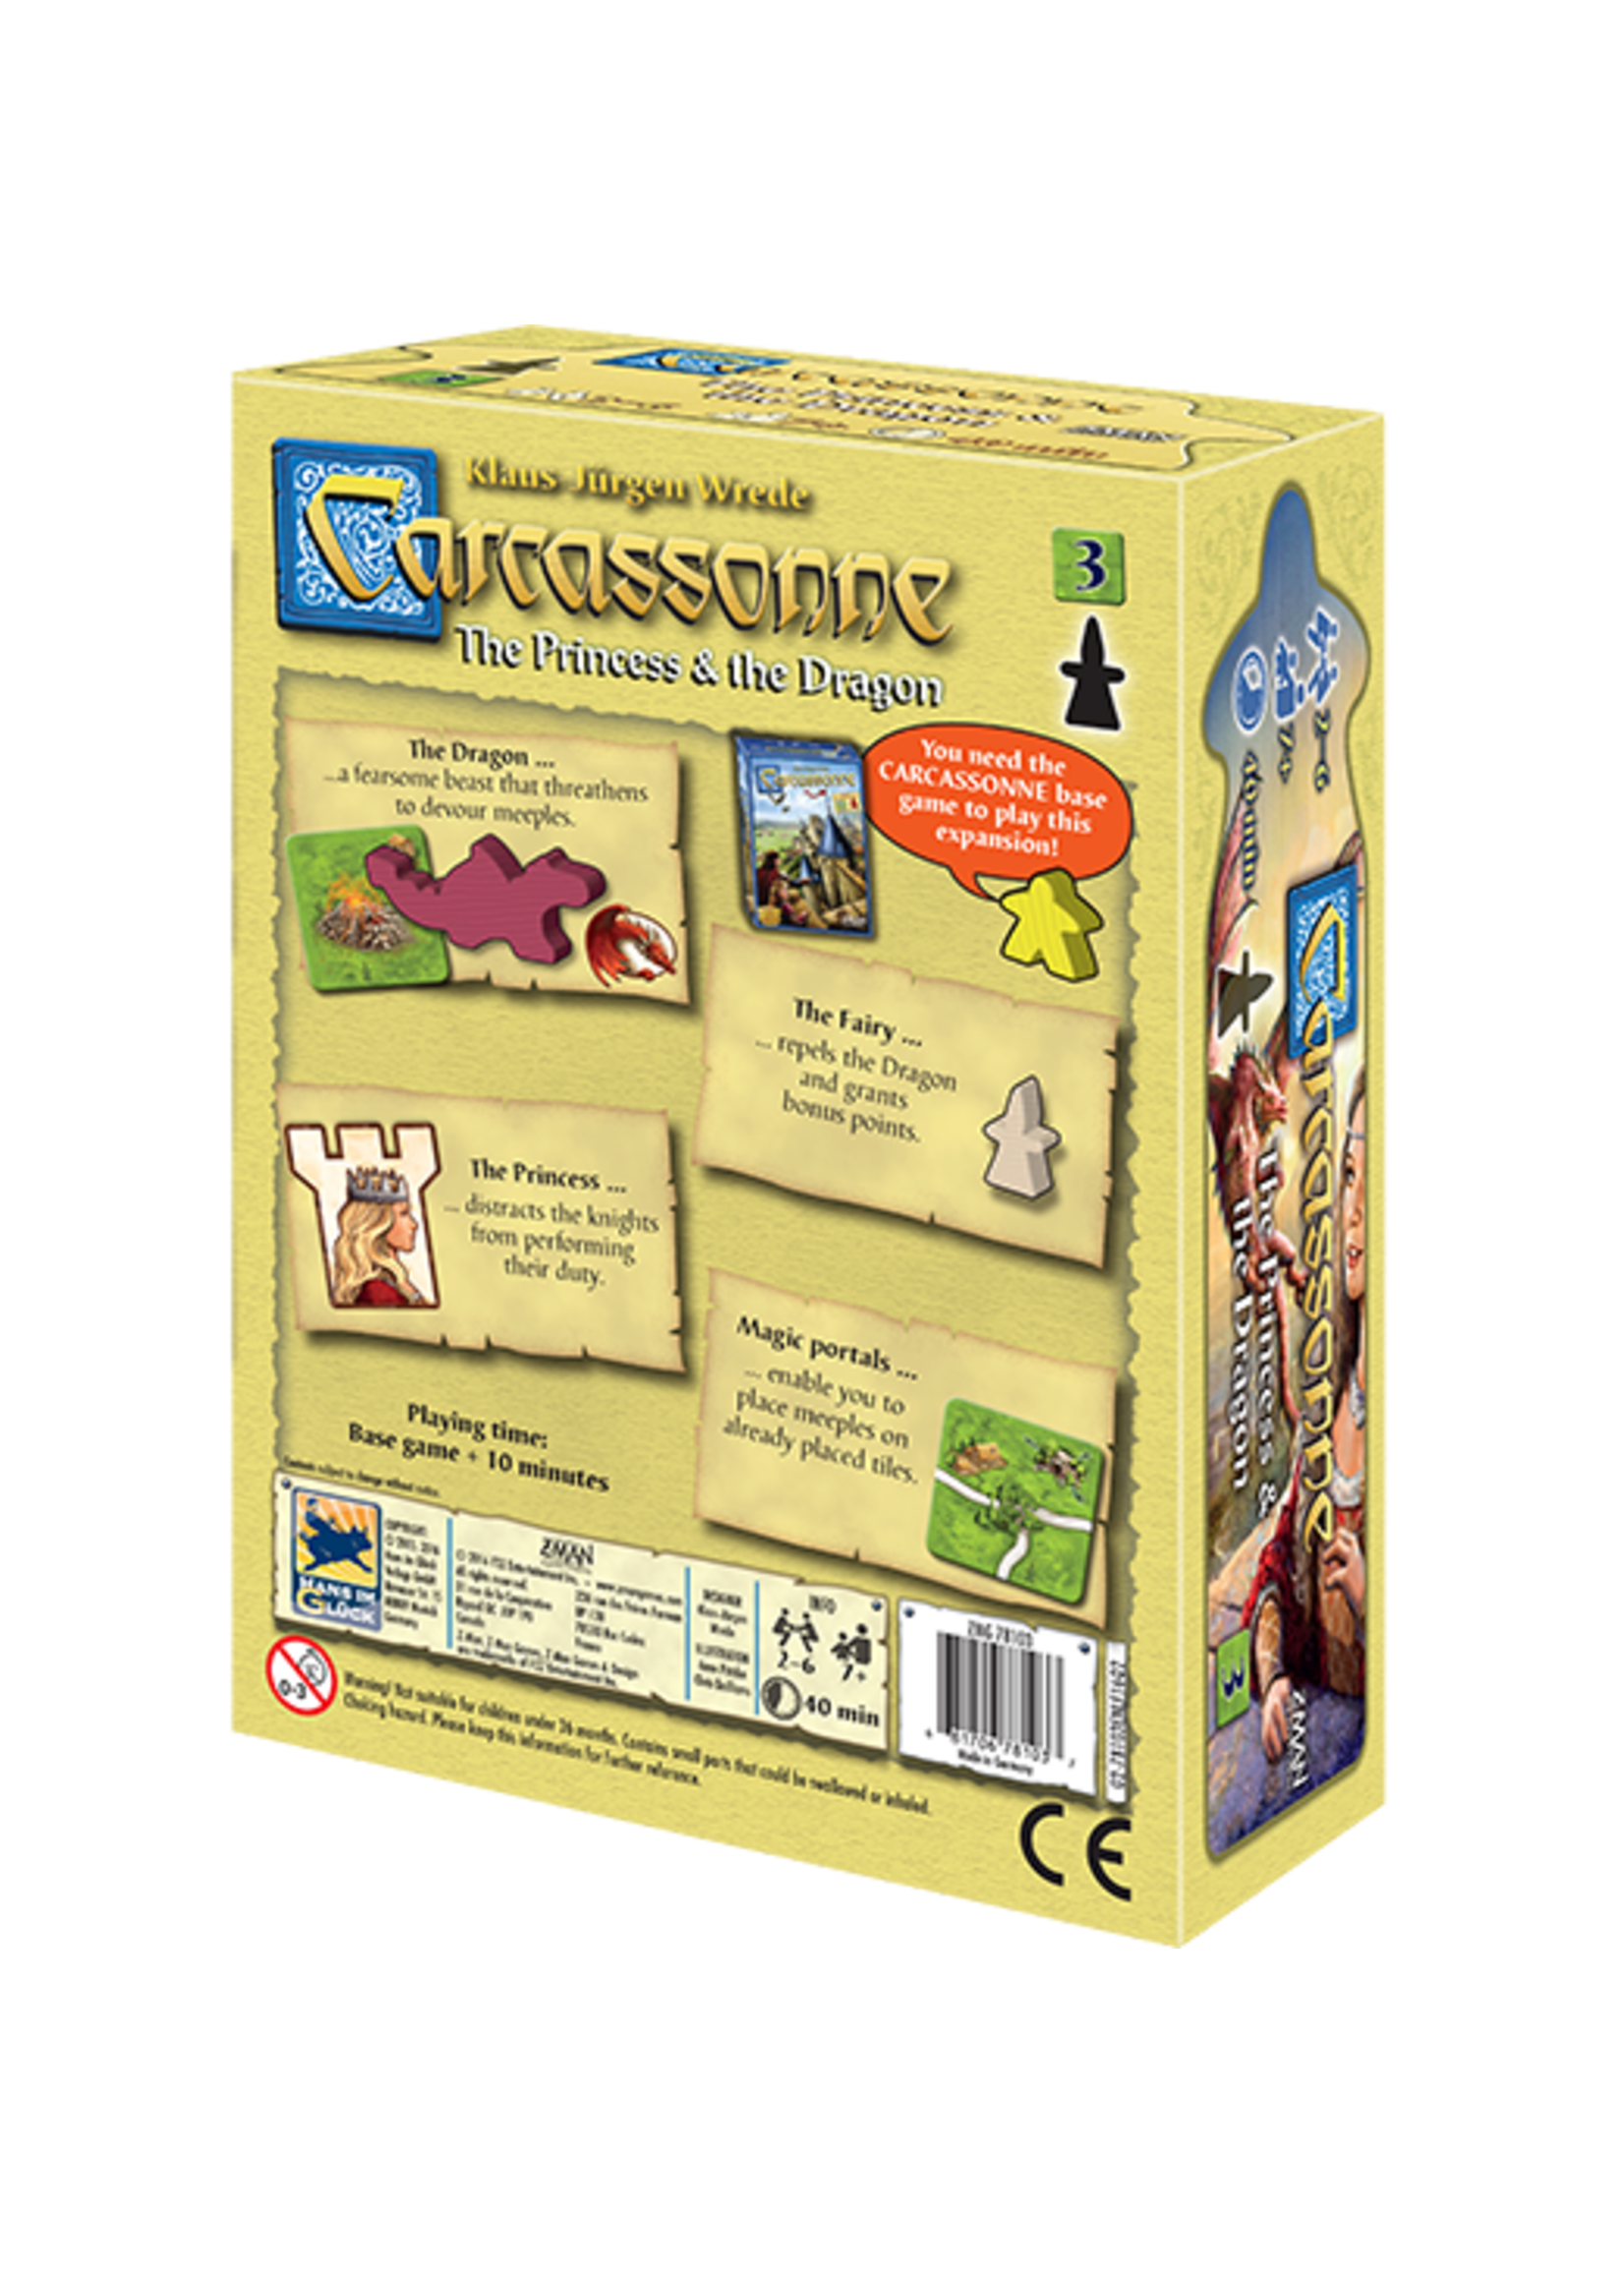 Z-Man Games Carcassonne: The Princess & the Dragon Expansion